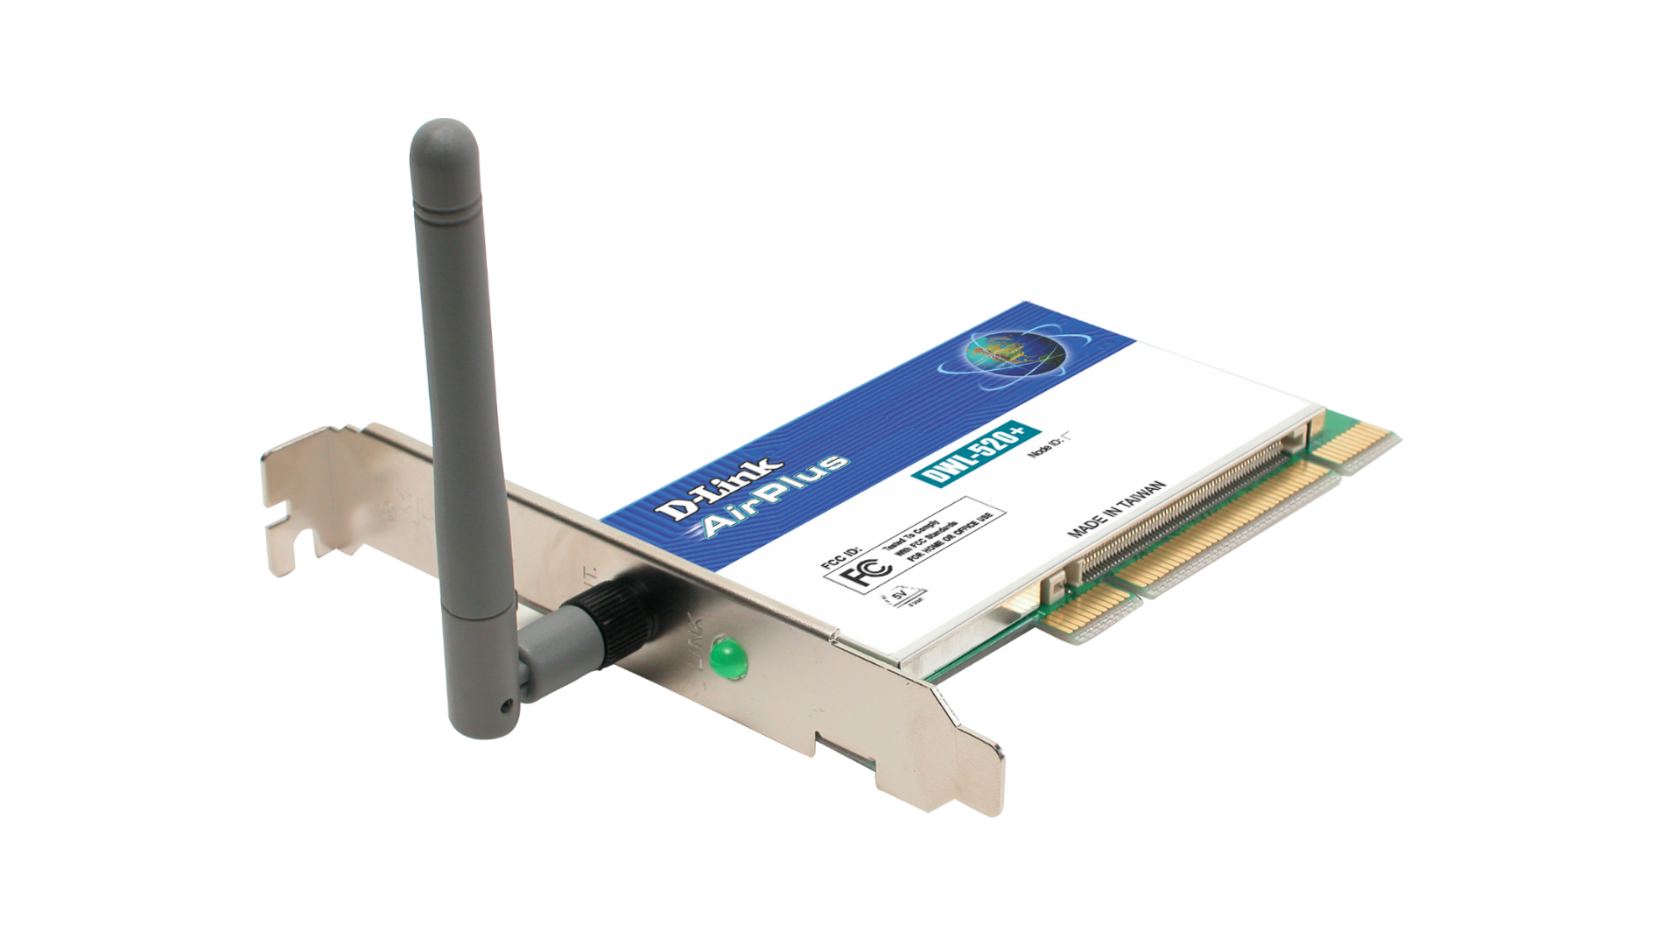 Сетевая карта d link. Адаптер беспроводной d-link dwa-520,802.11g+ до108. MB/C, PCI. DWL g520. D link g520 Wireless.